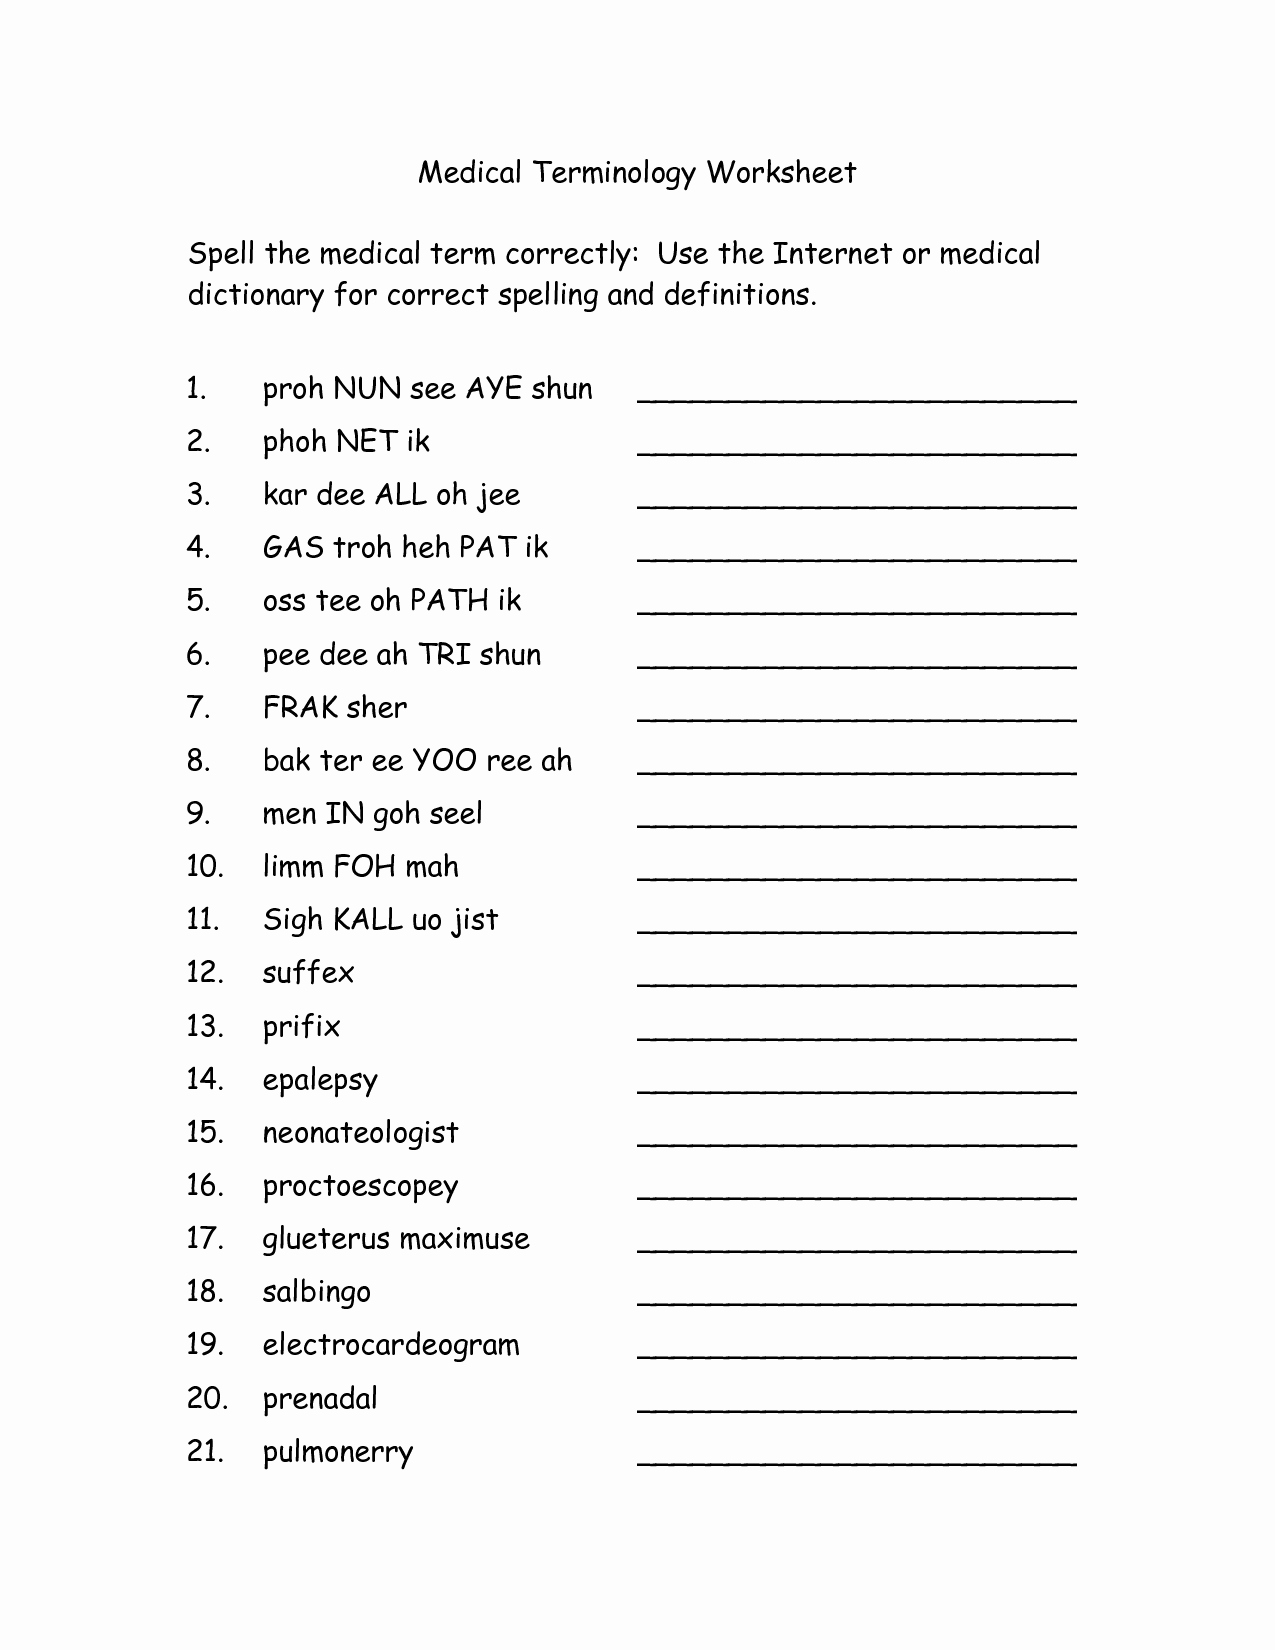 Medical Terminology Suffixes Worksheet Elegant Free Printable Medical Terminology Worksheets Cakepins